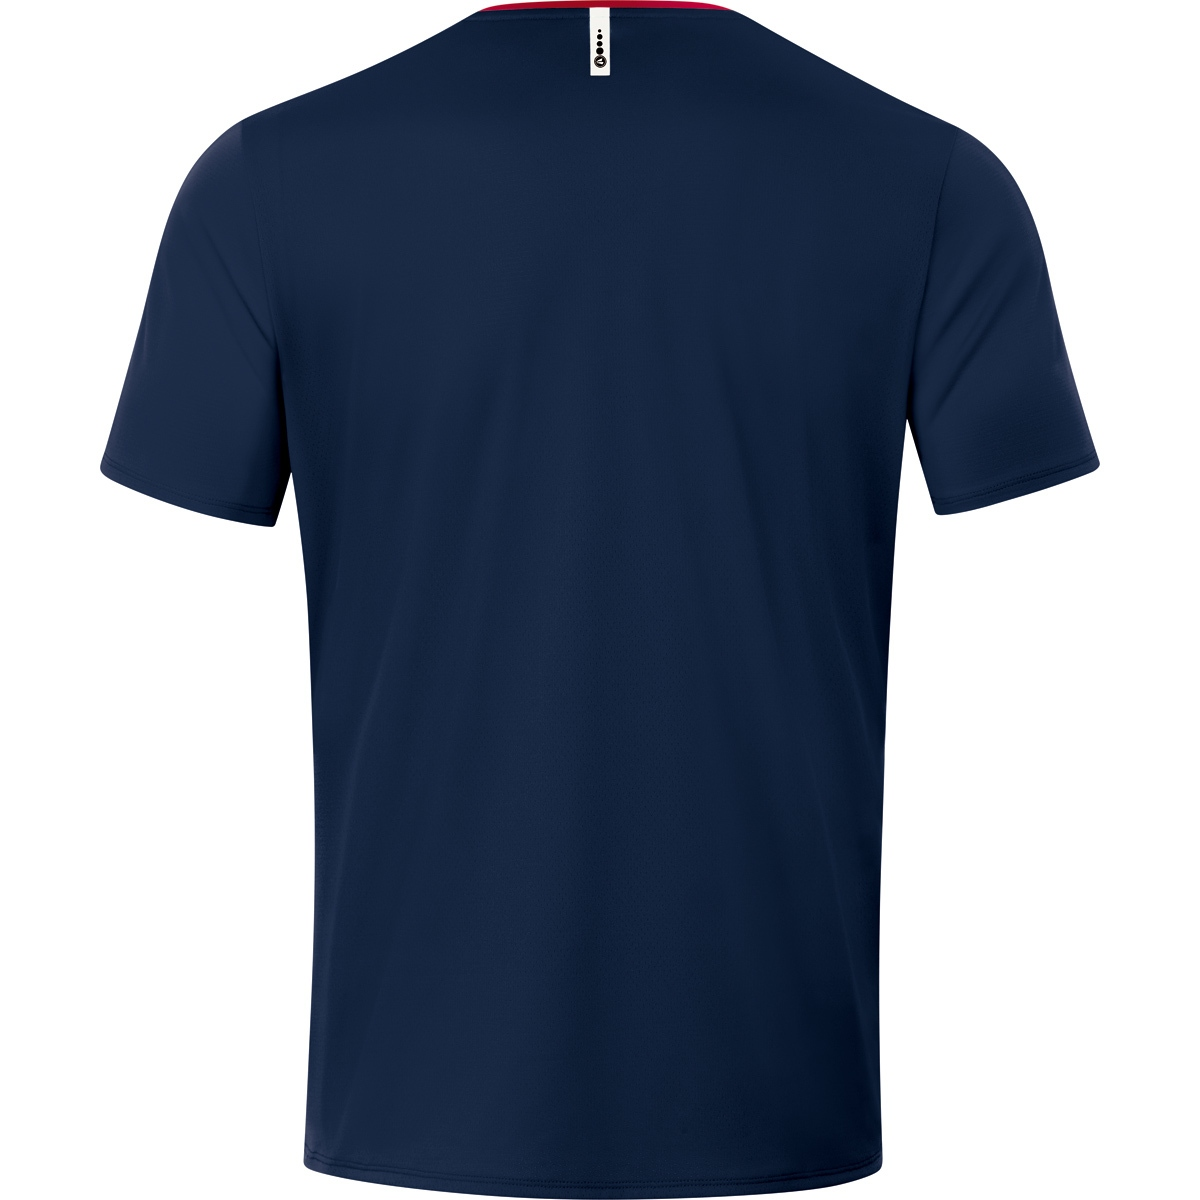 Herren, T-Shirt JAKO Champ 6120 Gr. marine/chili 2.0 M, rot,